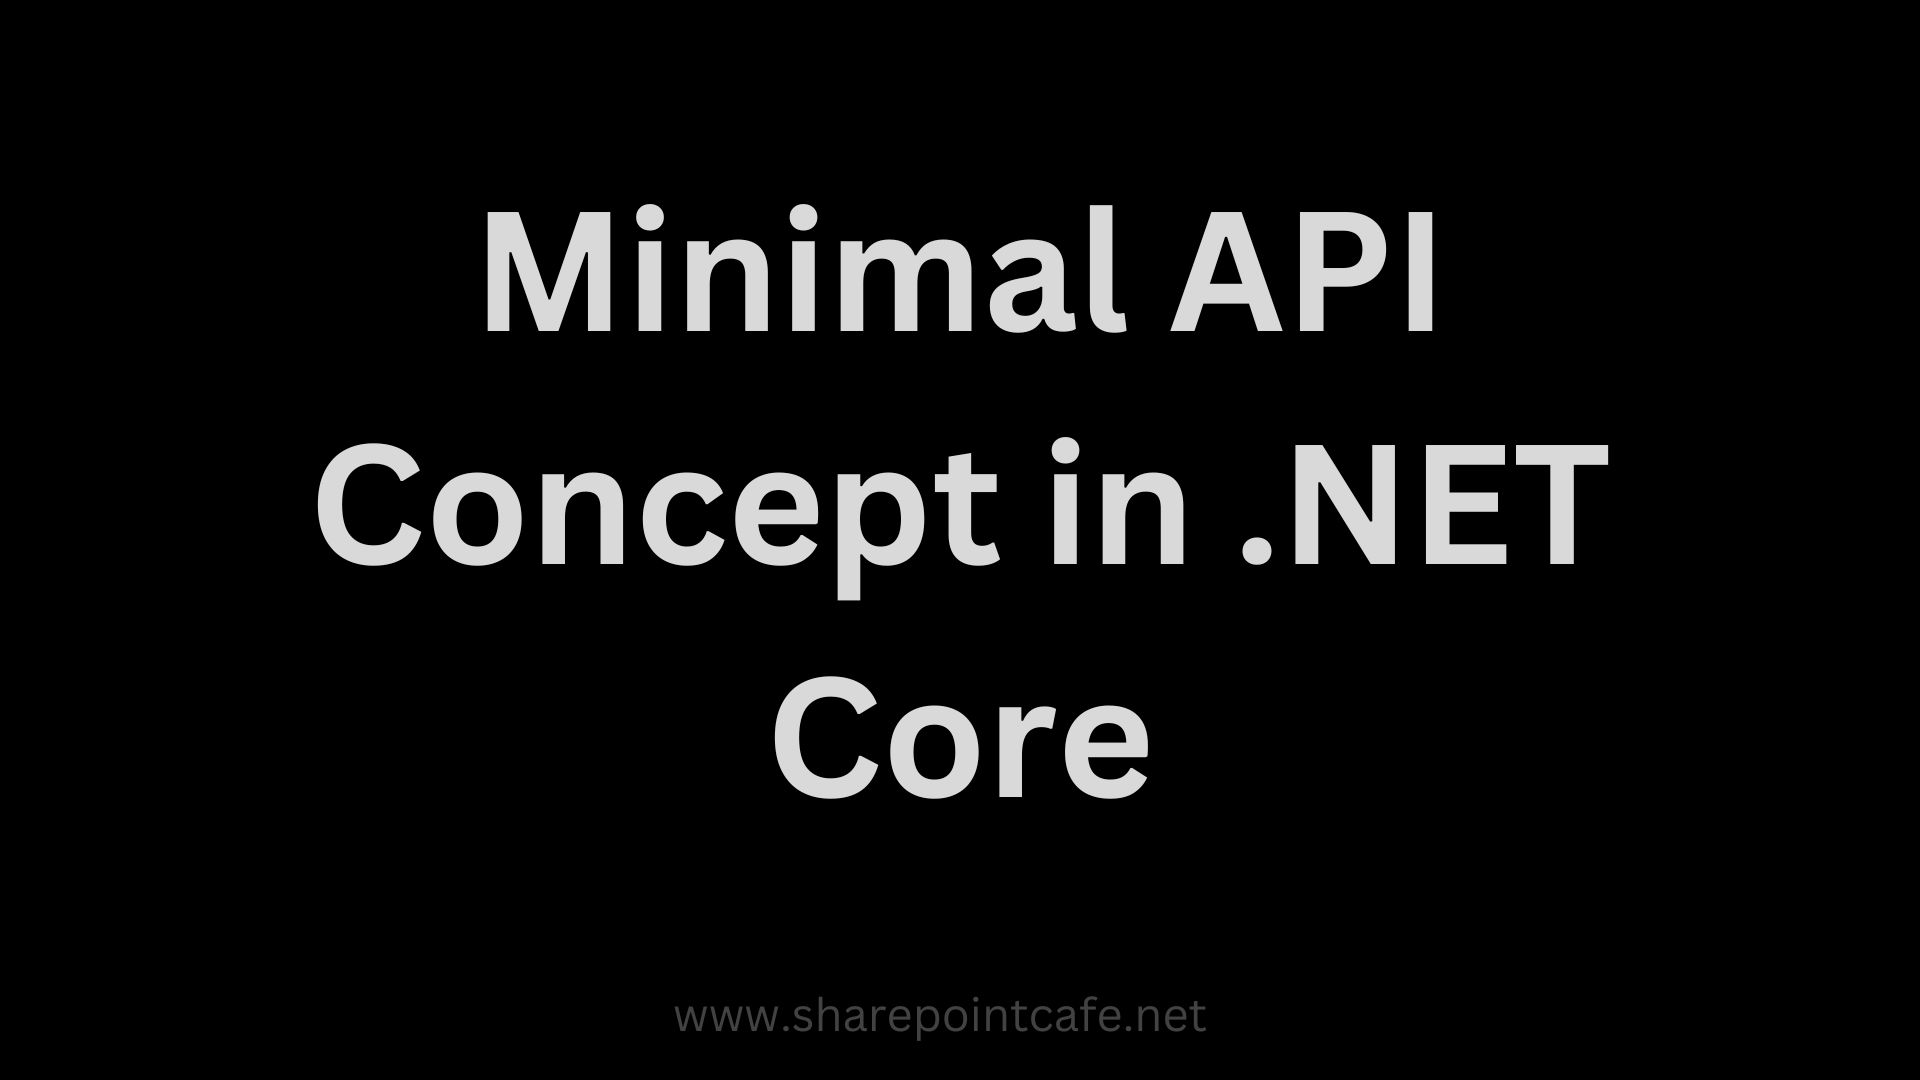 Minimal API Concept in .NET Core